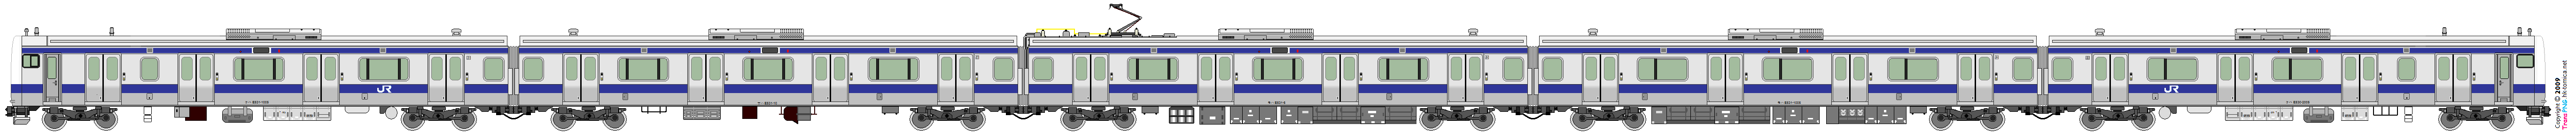 5006 - [5006] East Japan Railway 52162845924_c3a182c404_o